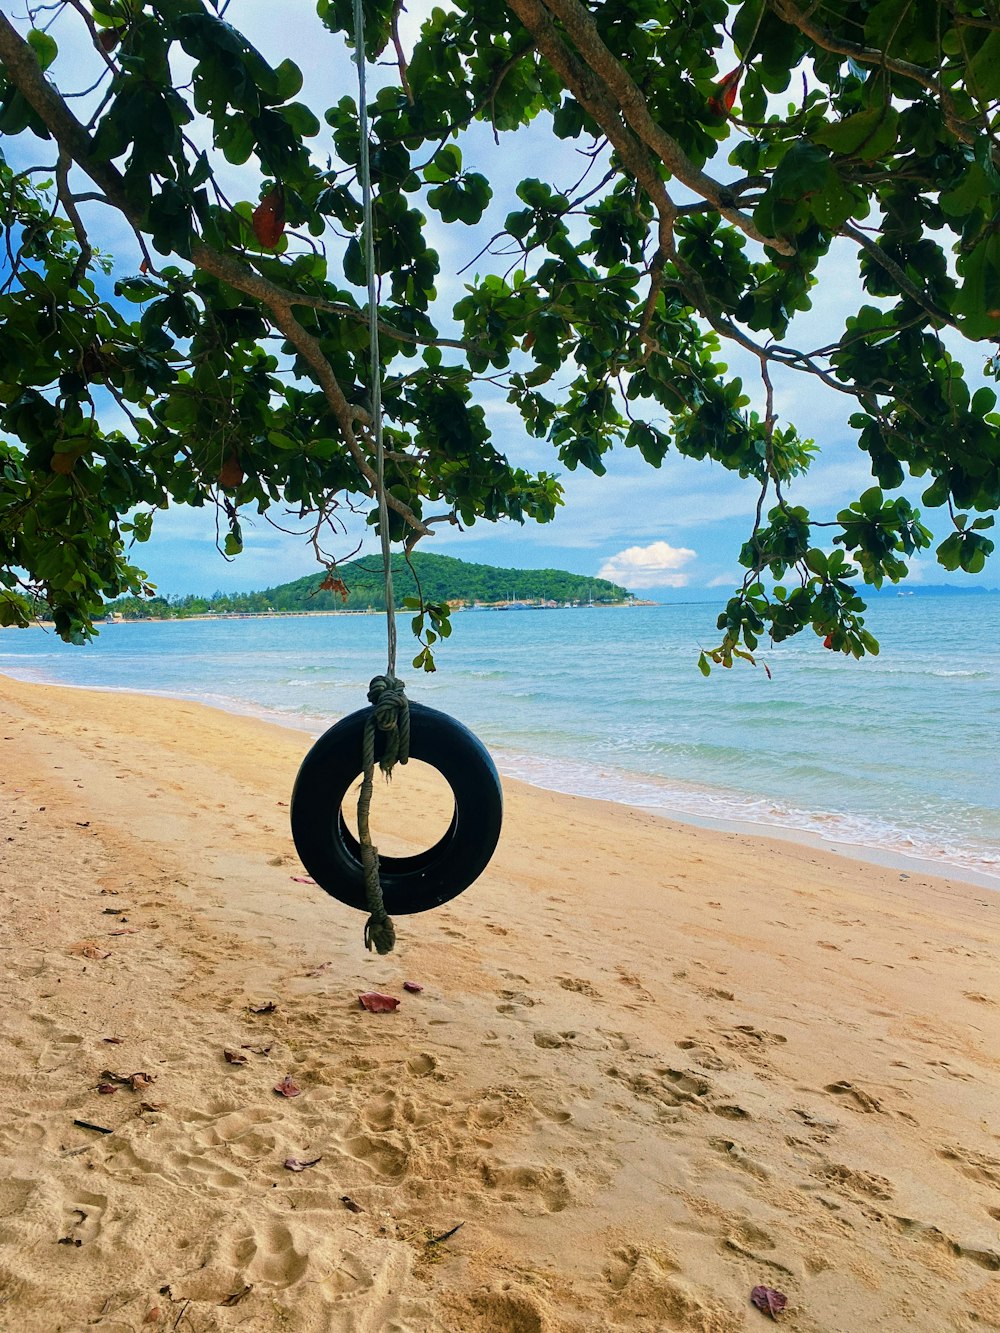 a swing on a beach